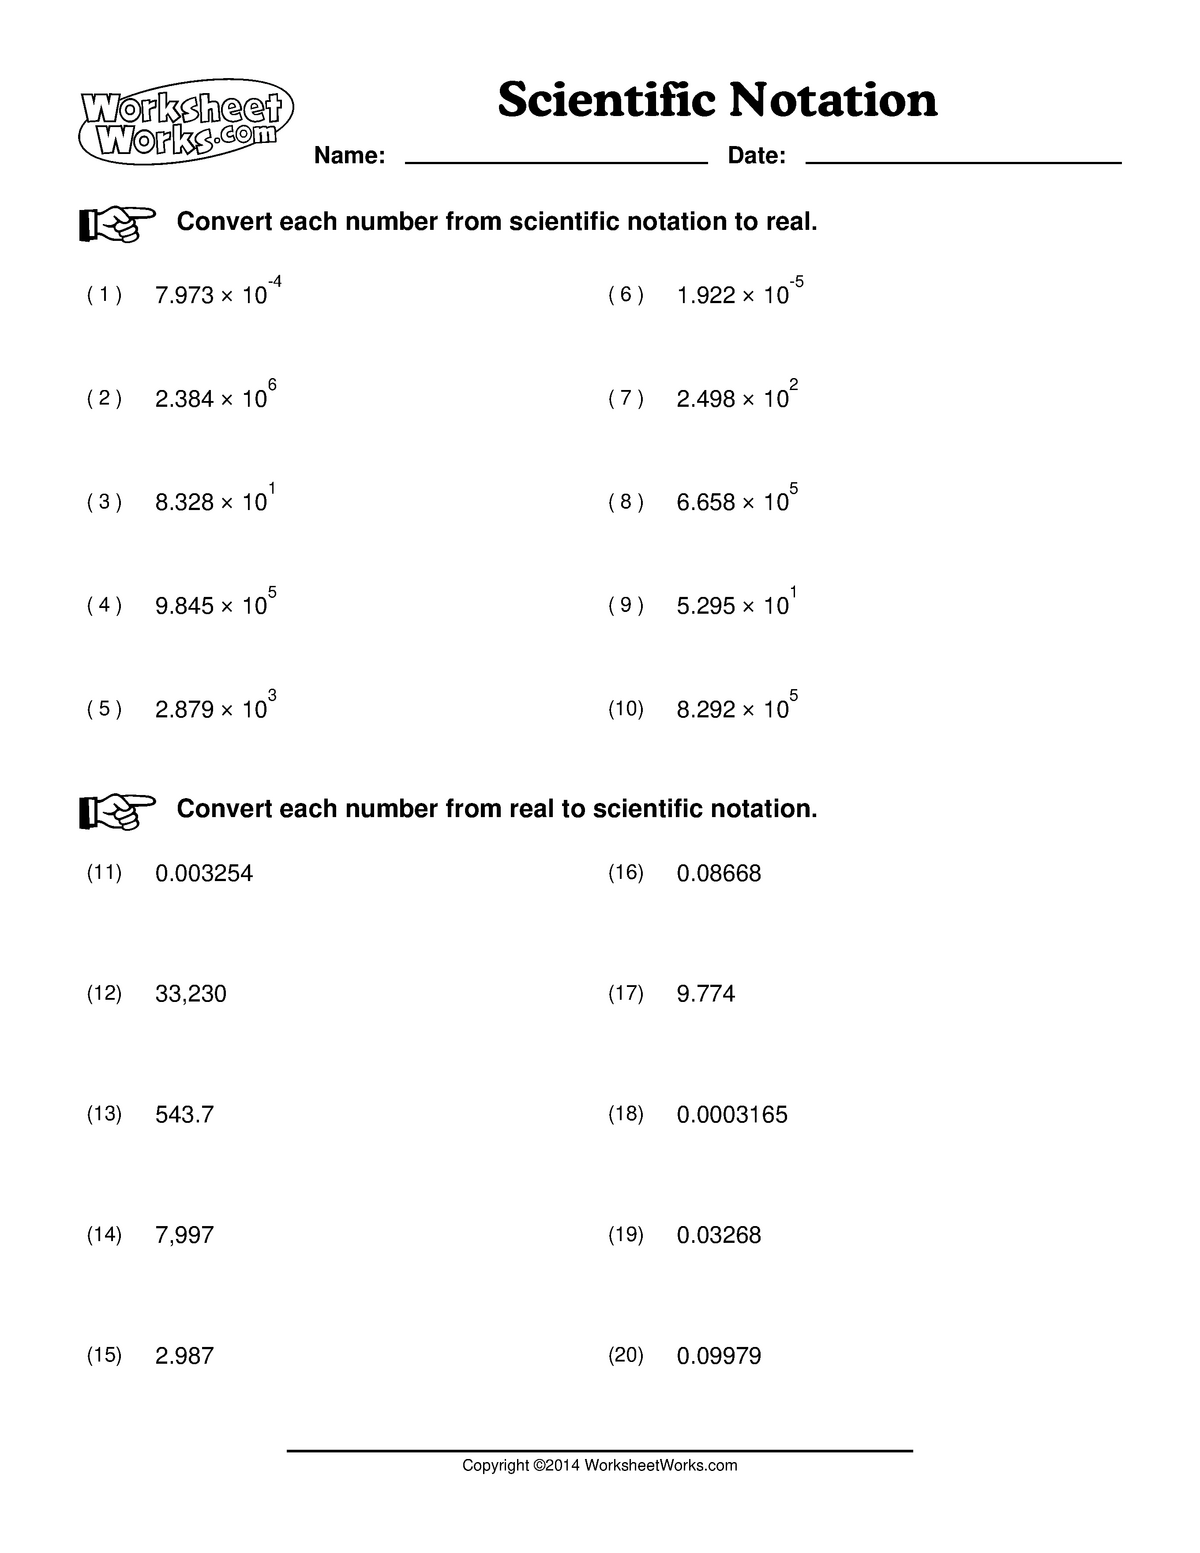 Scientific Notation Practice Problems - StuDocu Inside Scientific Notation Worksheet Chemistry